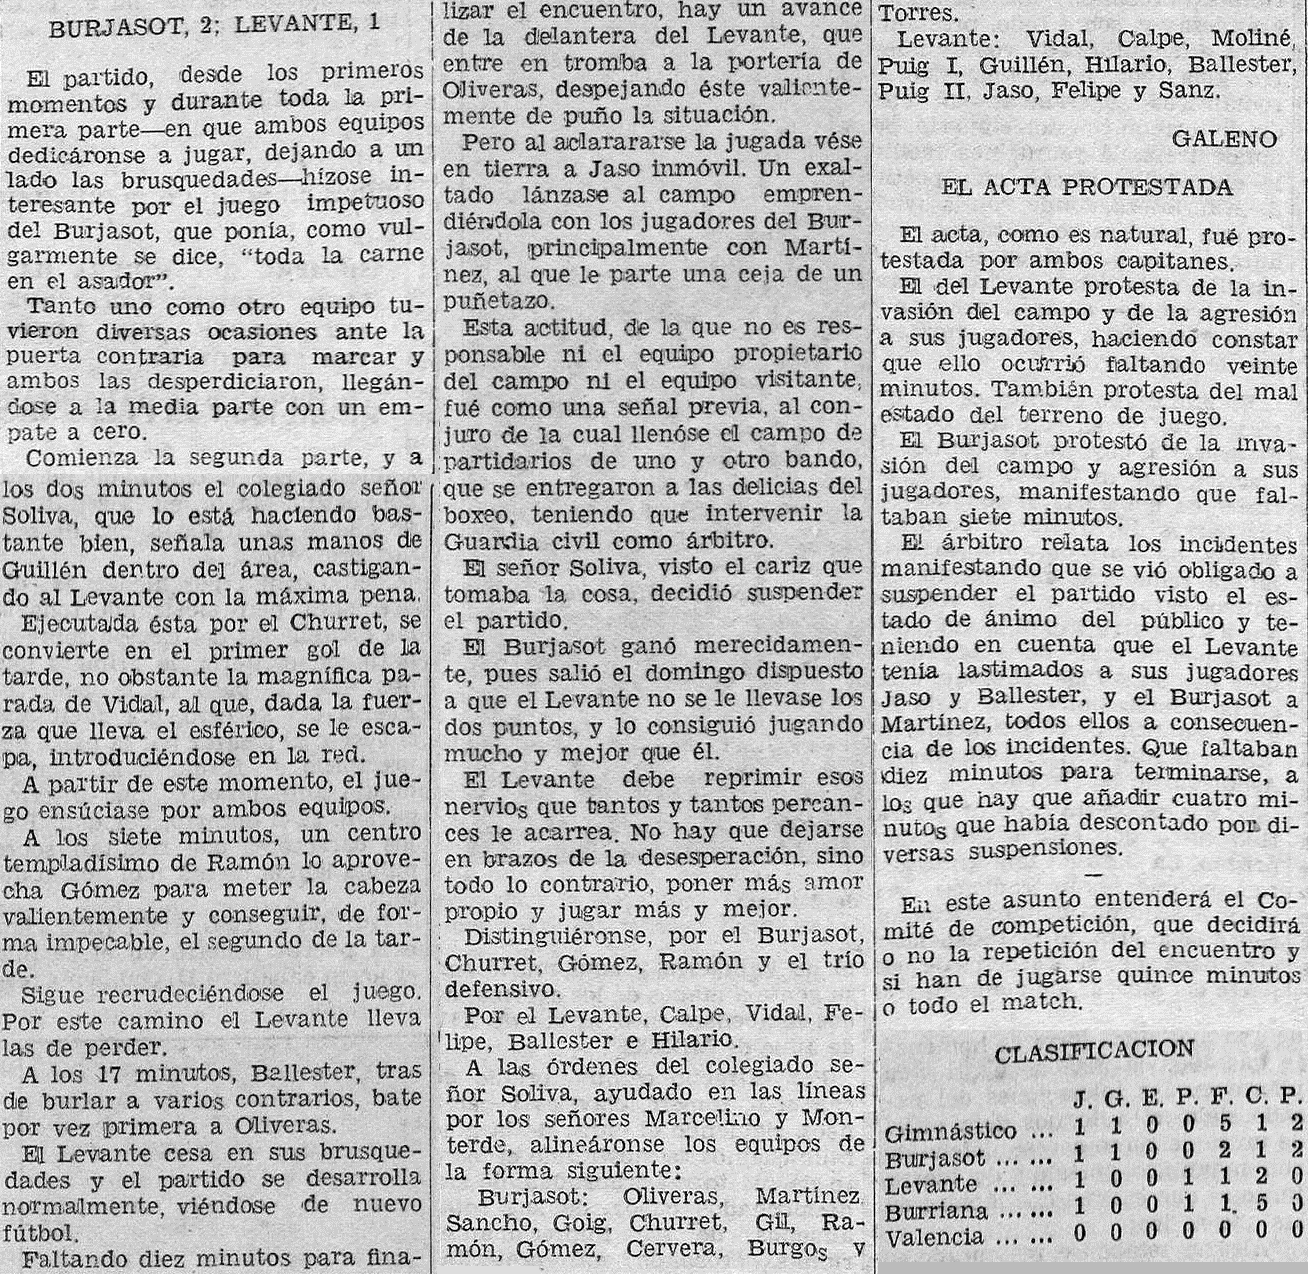 1933.09.03 (3 сентября 1933), Буржасот - Леванте, 2-1 - не доигран.png